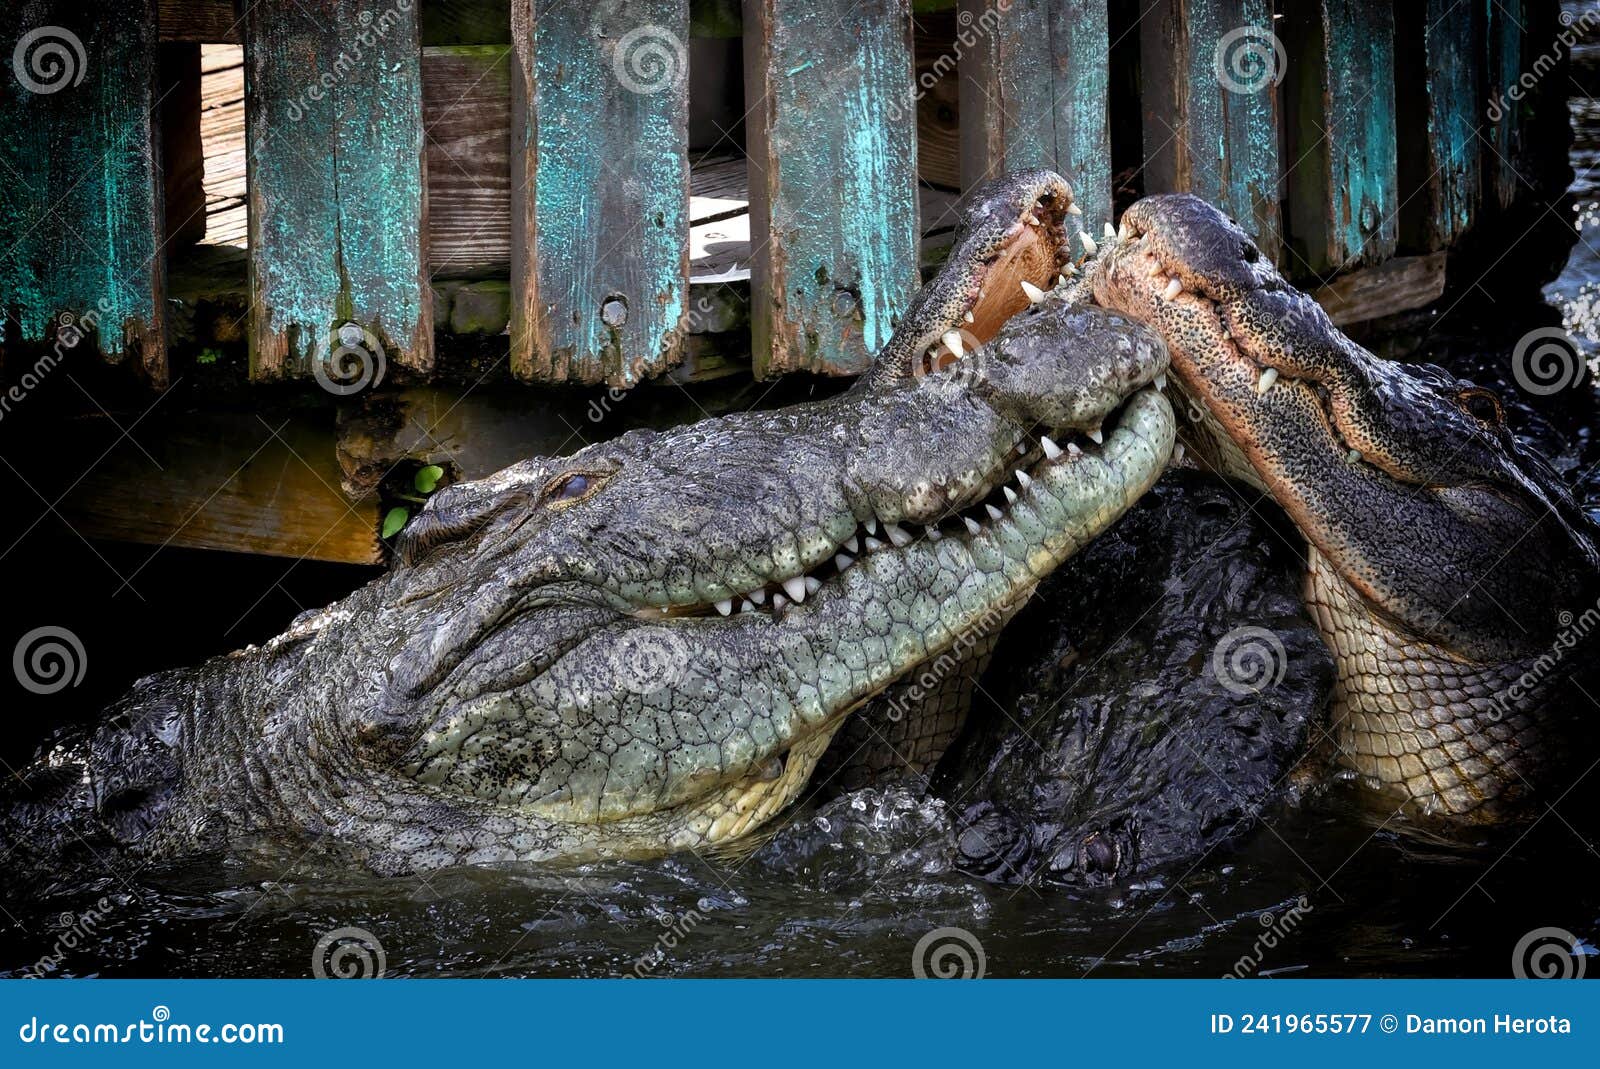 Two Florida Alligators Sunning On Dock Stock Image Image Of Marsh